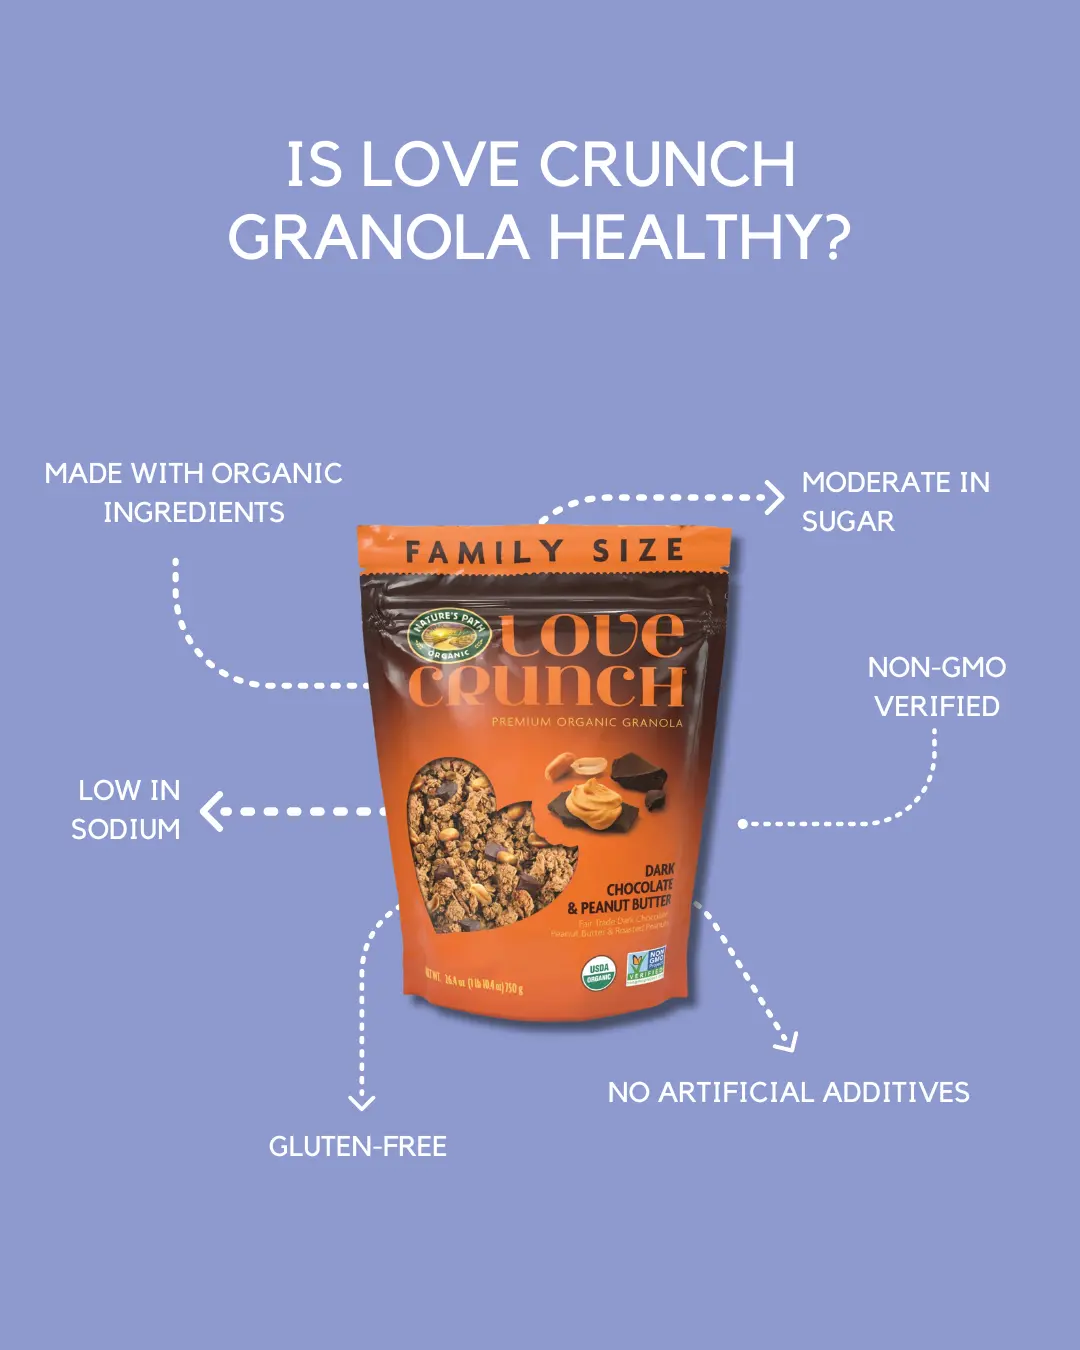 Is Love Crunch granola healthy